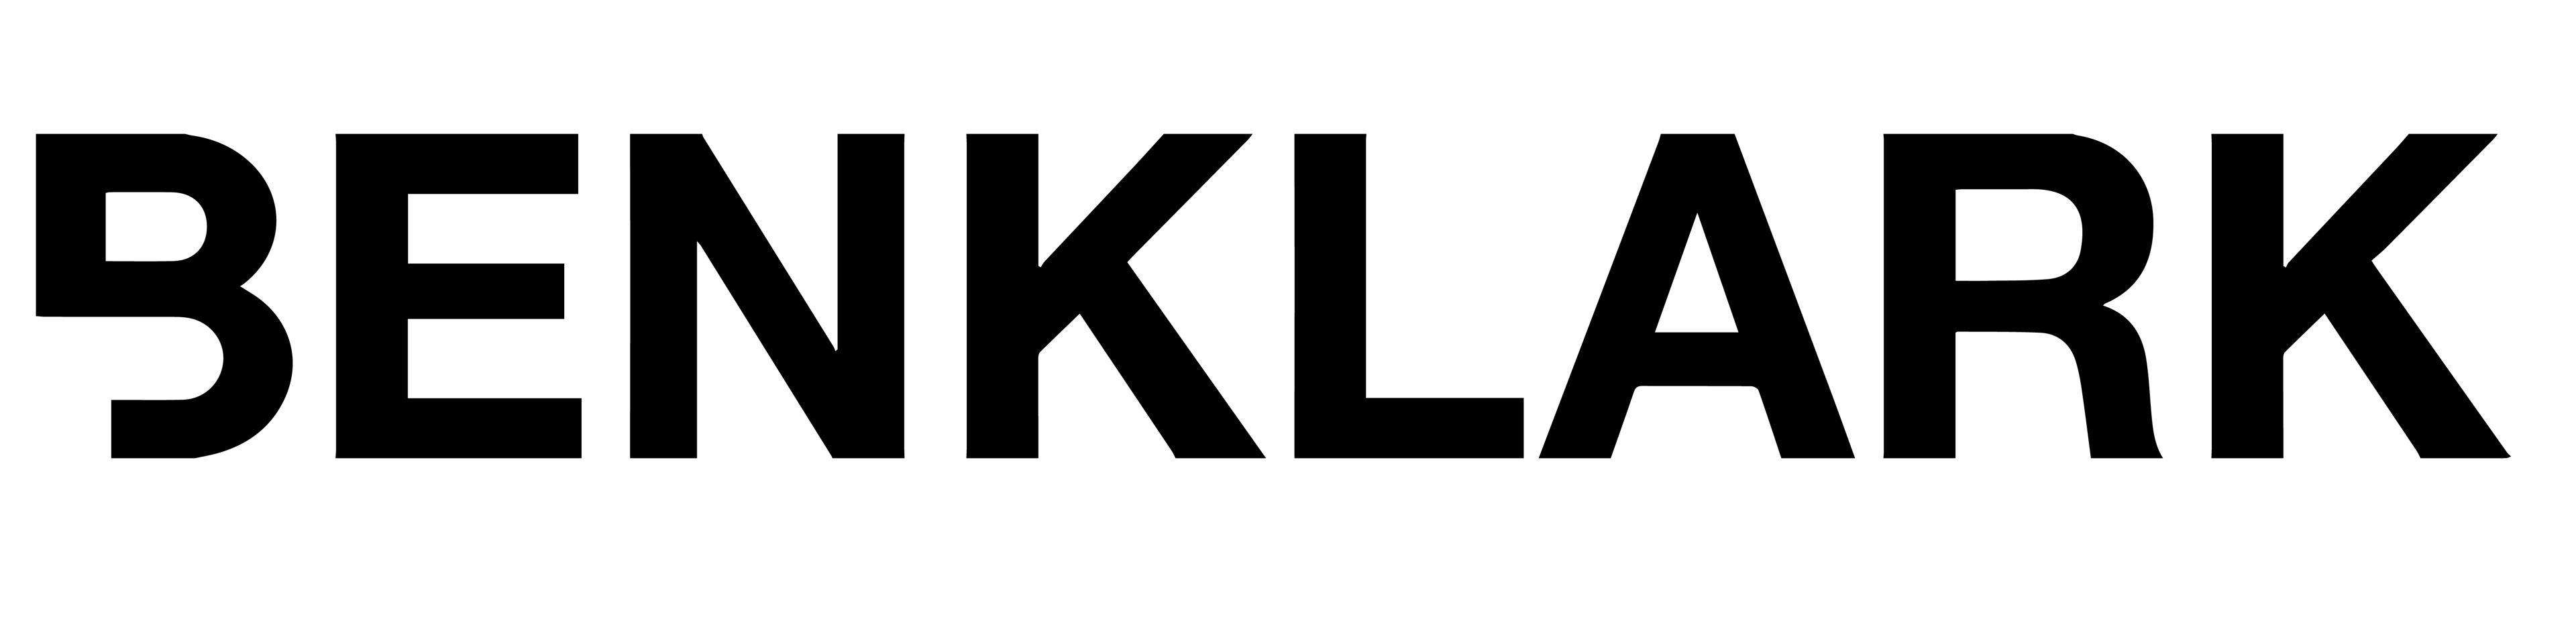 BENKLARK - MY ORDER logo